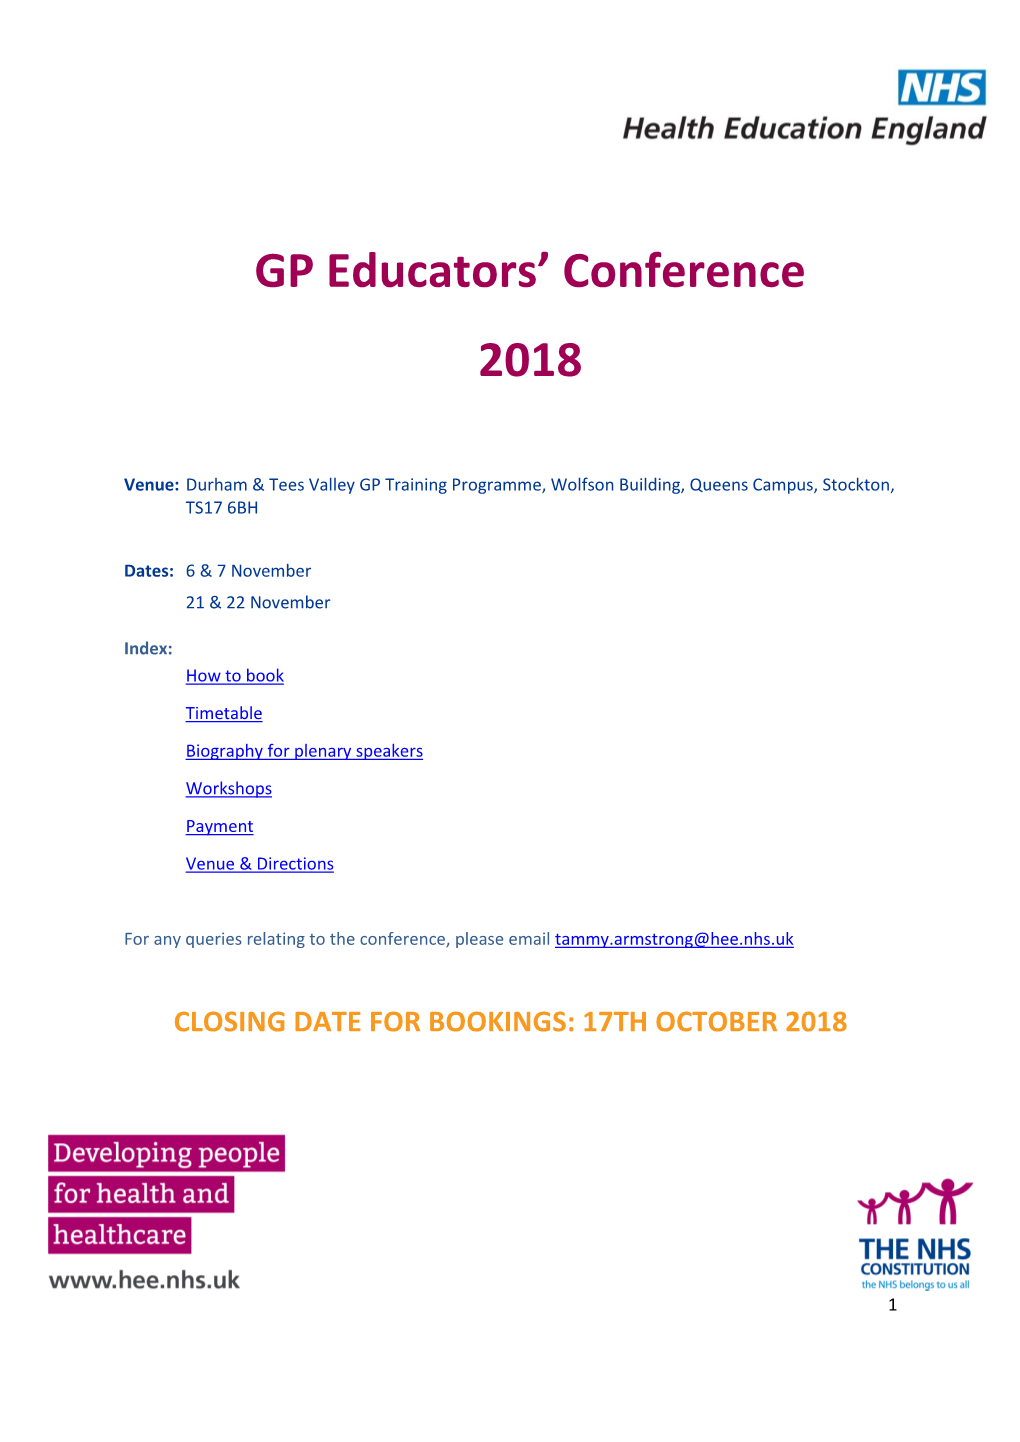 GP Educators' Conference 2018